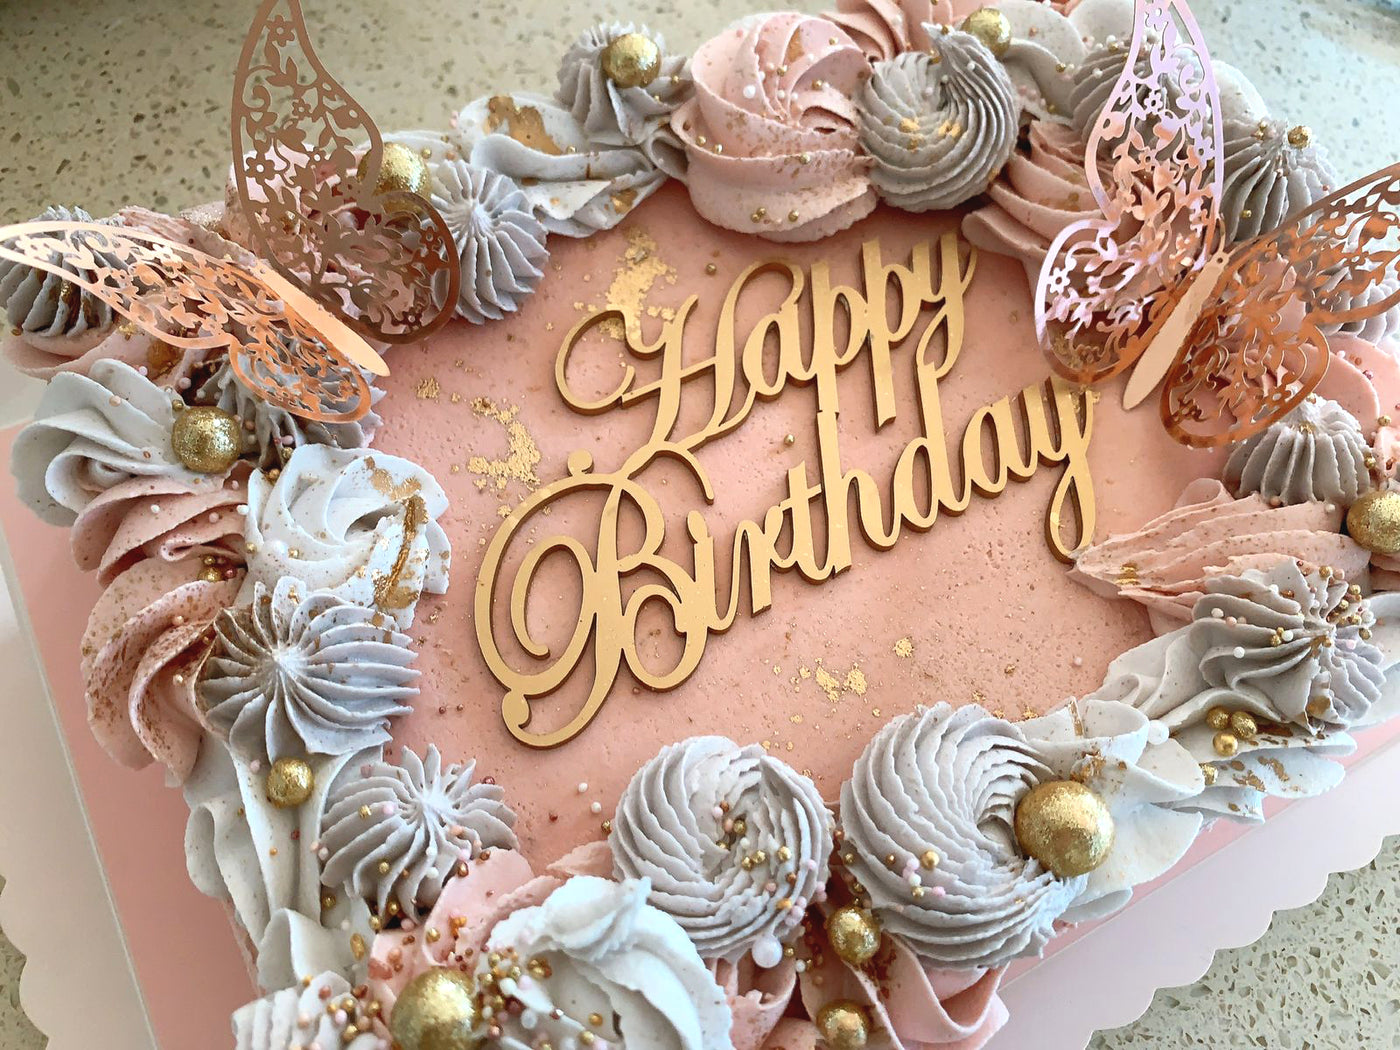 Custom Birthday Celebration Cakes and Cupcakes | Miami Bakehouse